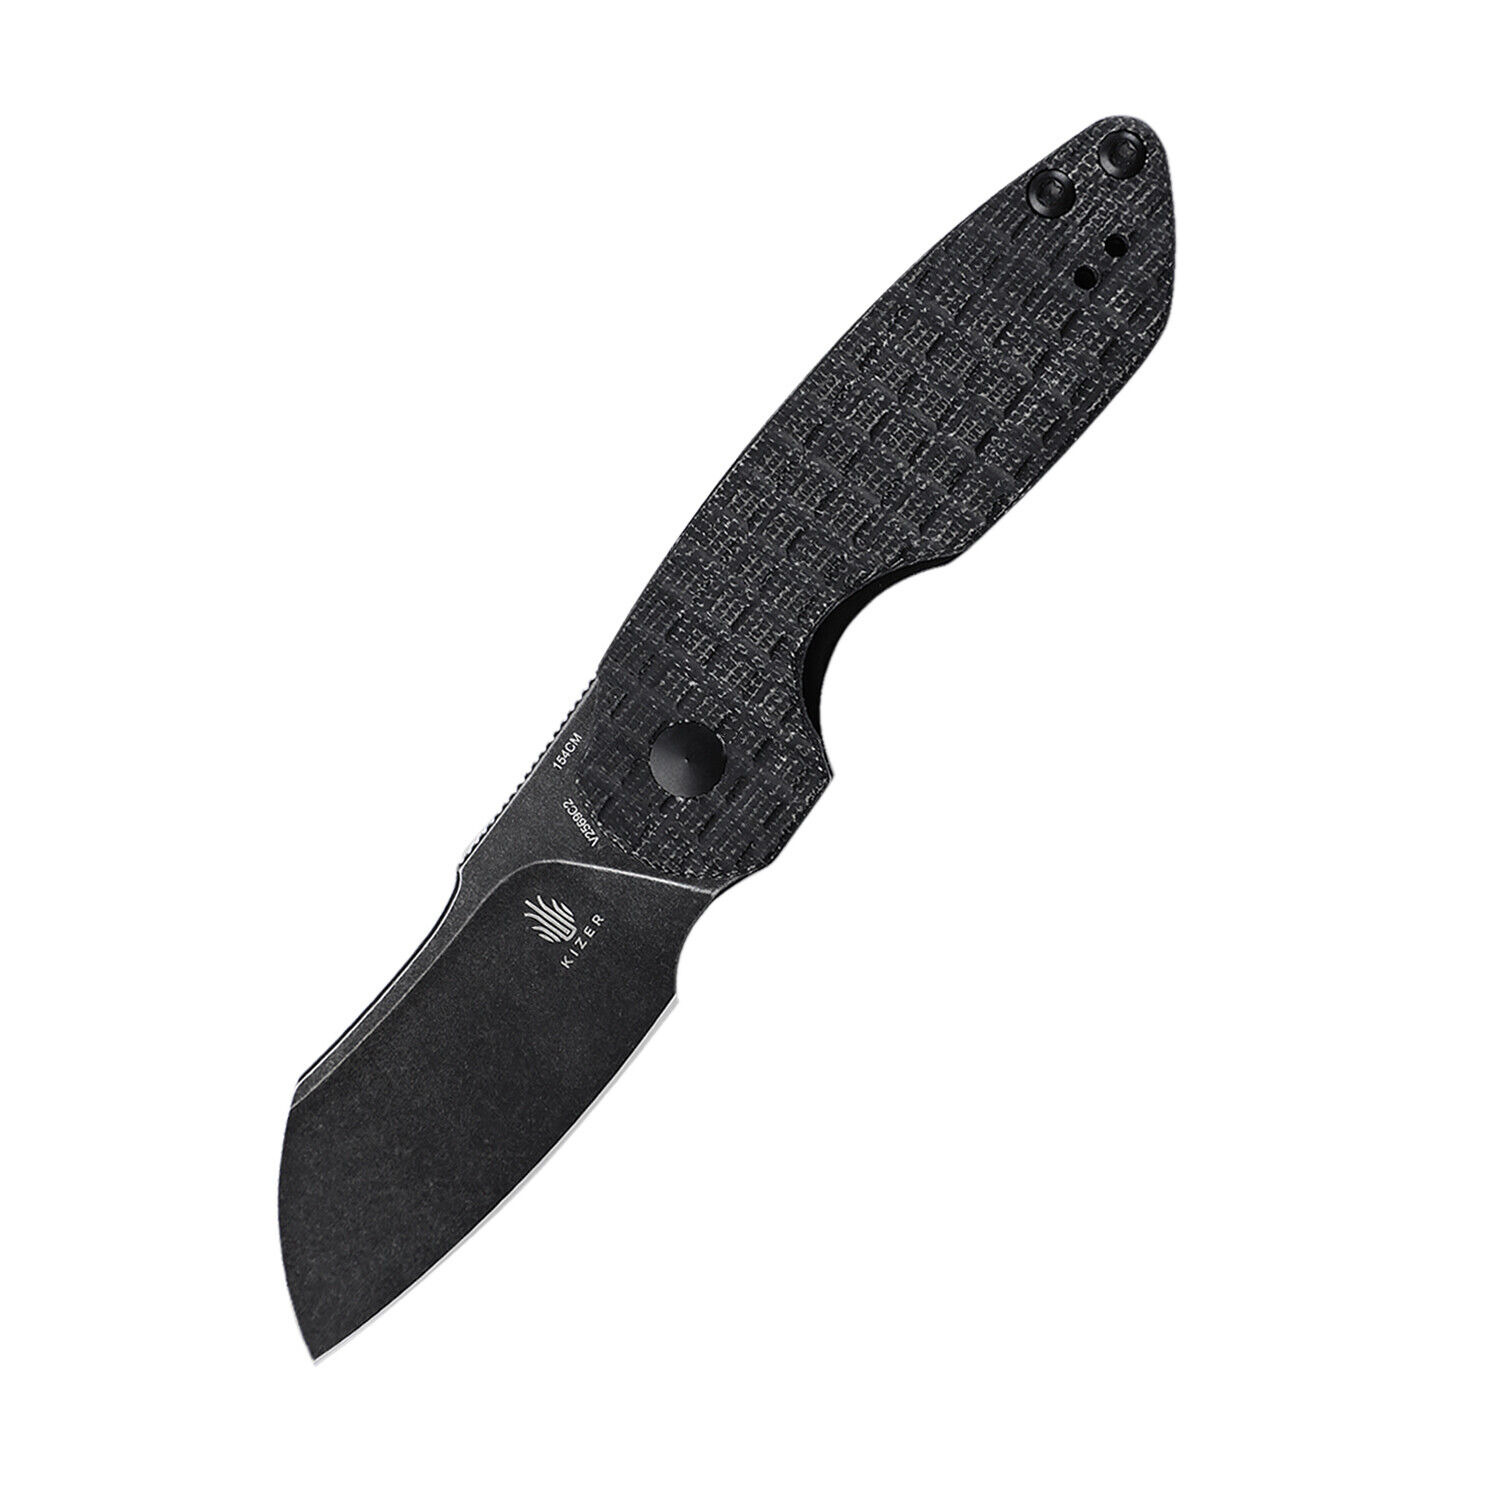 Kizer OCTOBER Mini EDC Folding Knife Black Micarta Handle 154CM Steel V2569C2